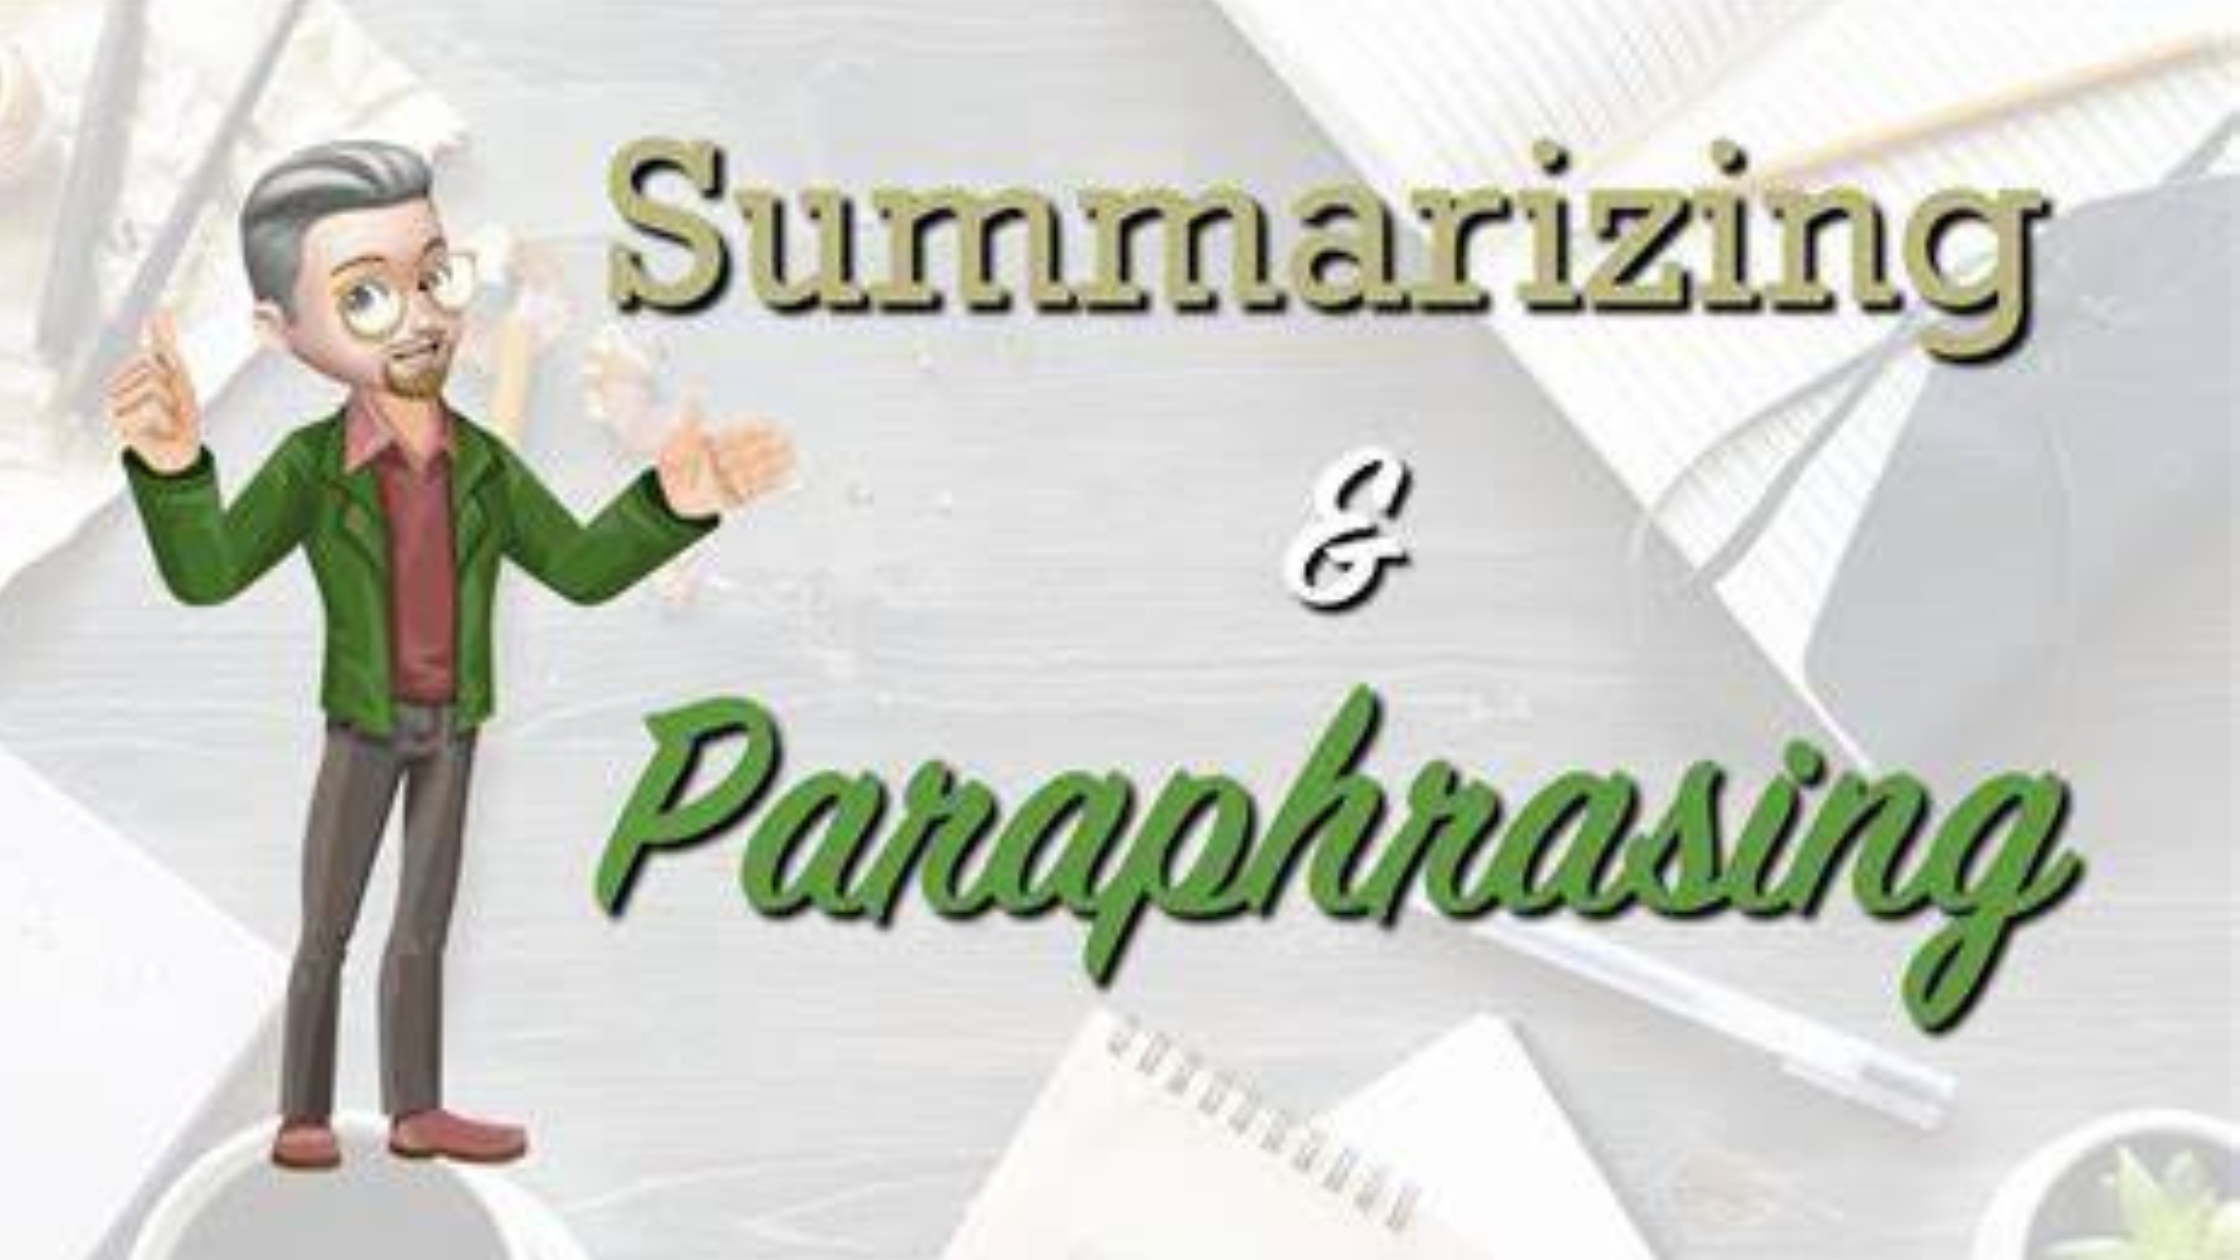 Understanding Summarizing and Paraphrasing